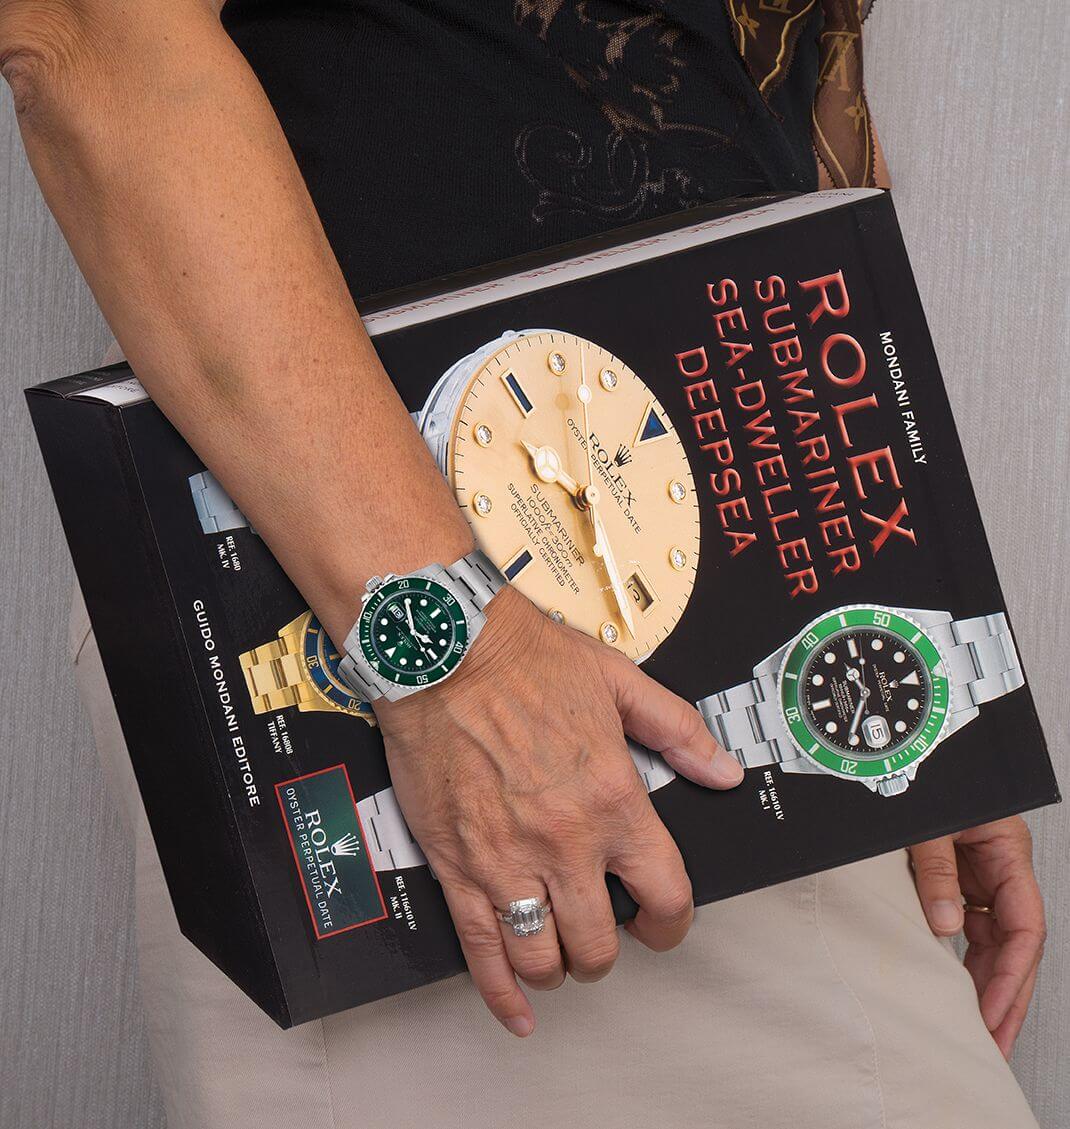 Giorgia Mondani wears a Rolex Hulk and Diamond Ring while Holding her book Rolex Submariner Sea-Dweller Deepsea.